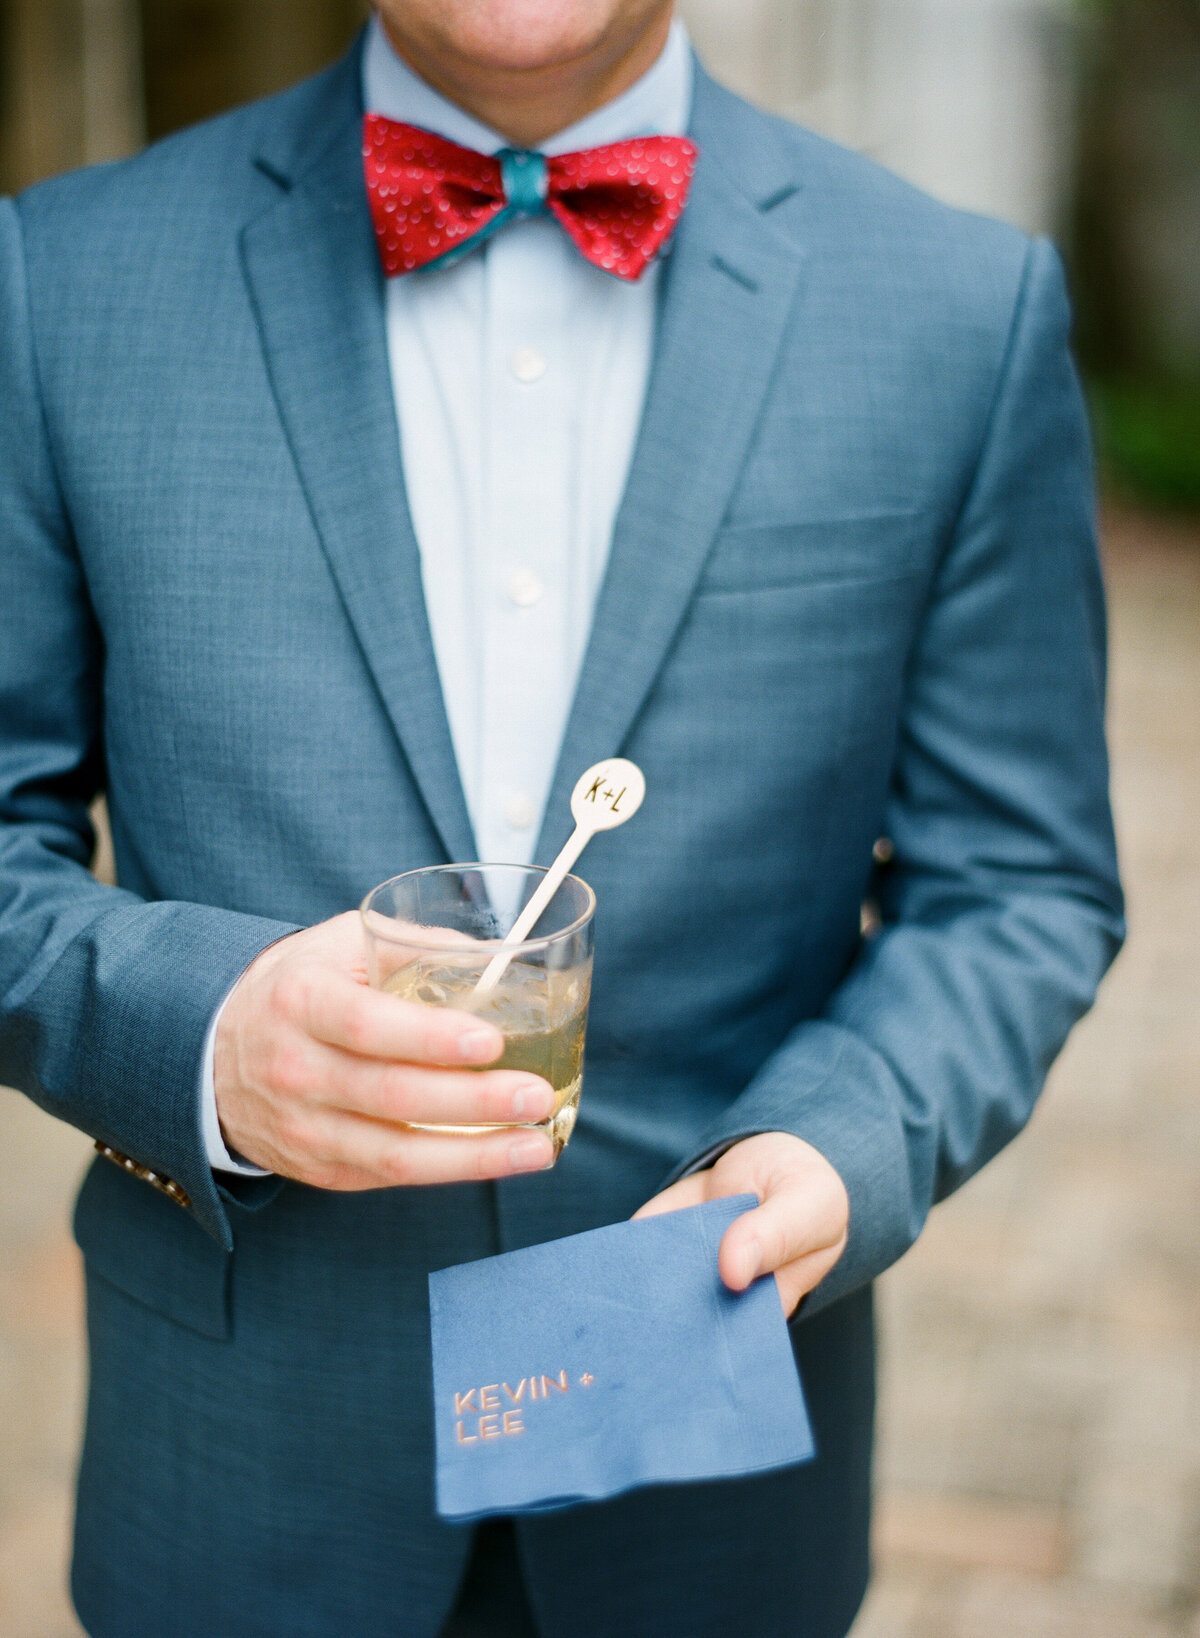 Wedding cocktail napkin